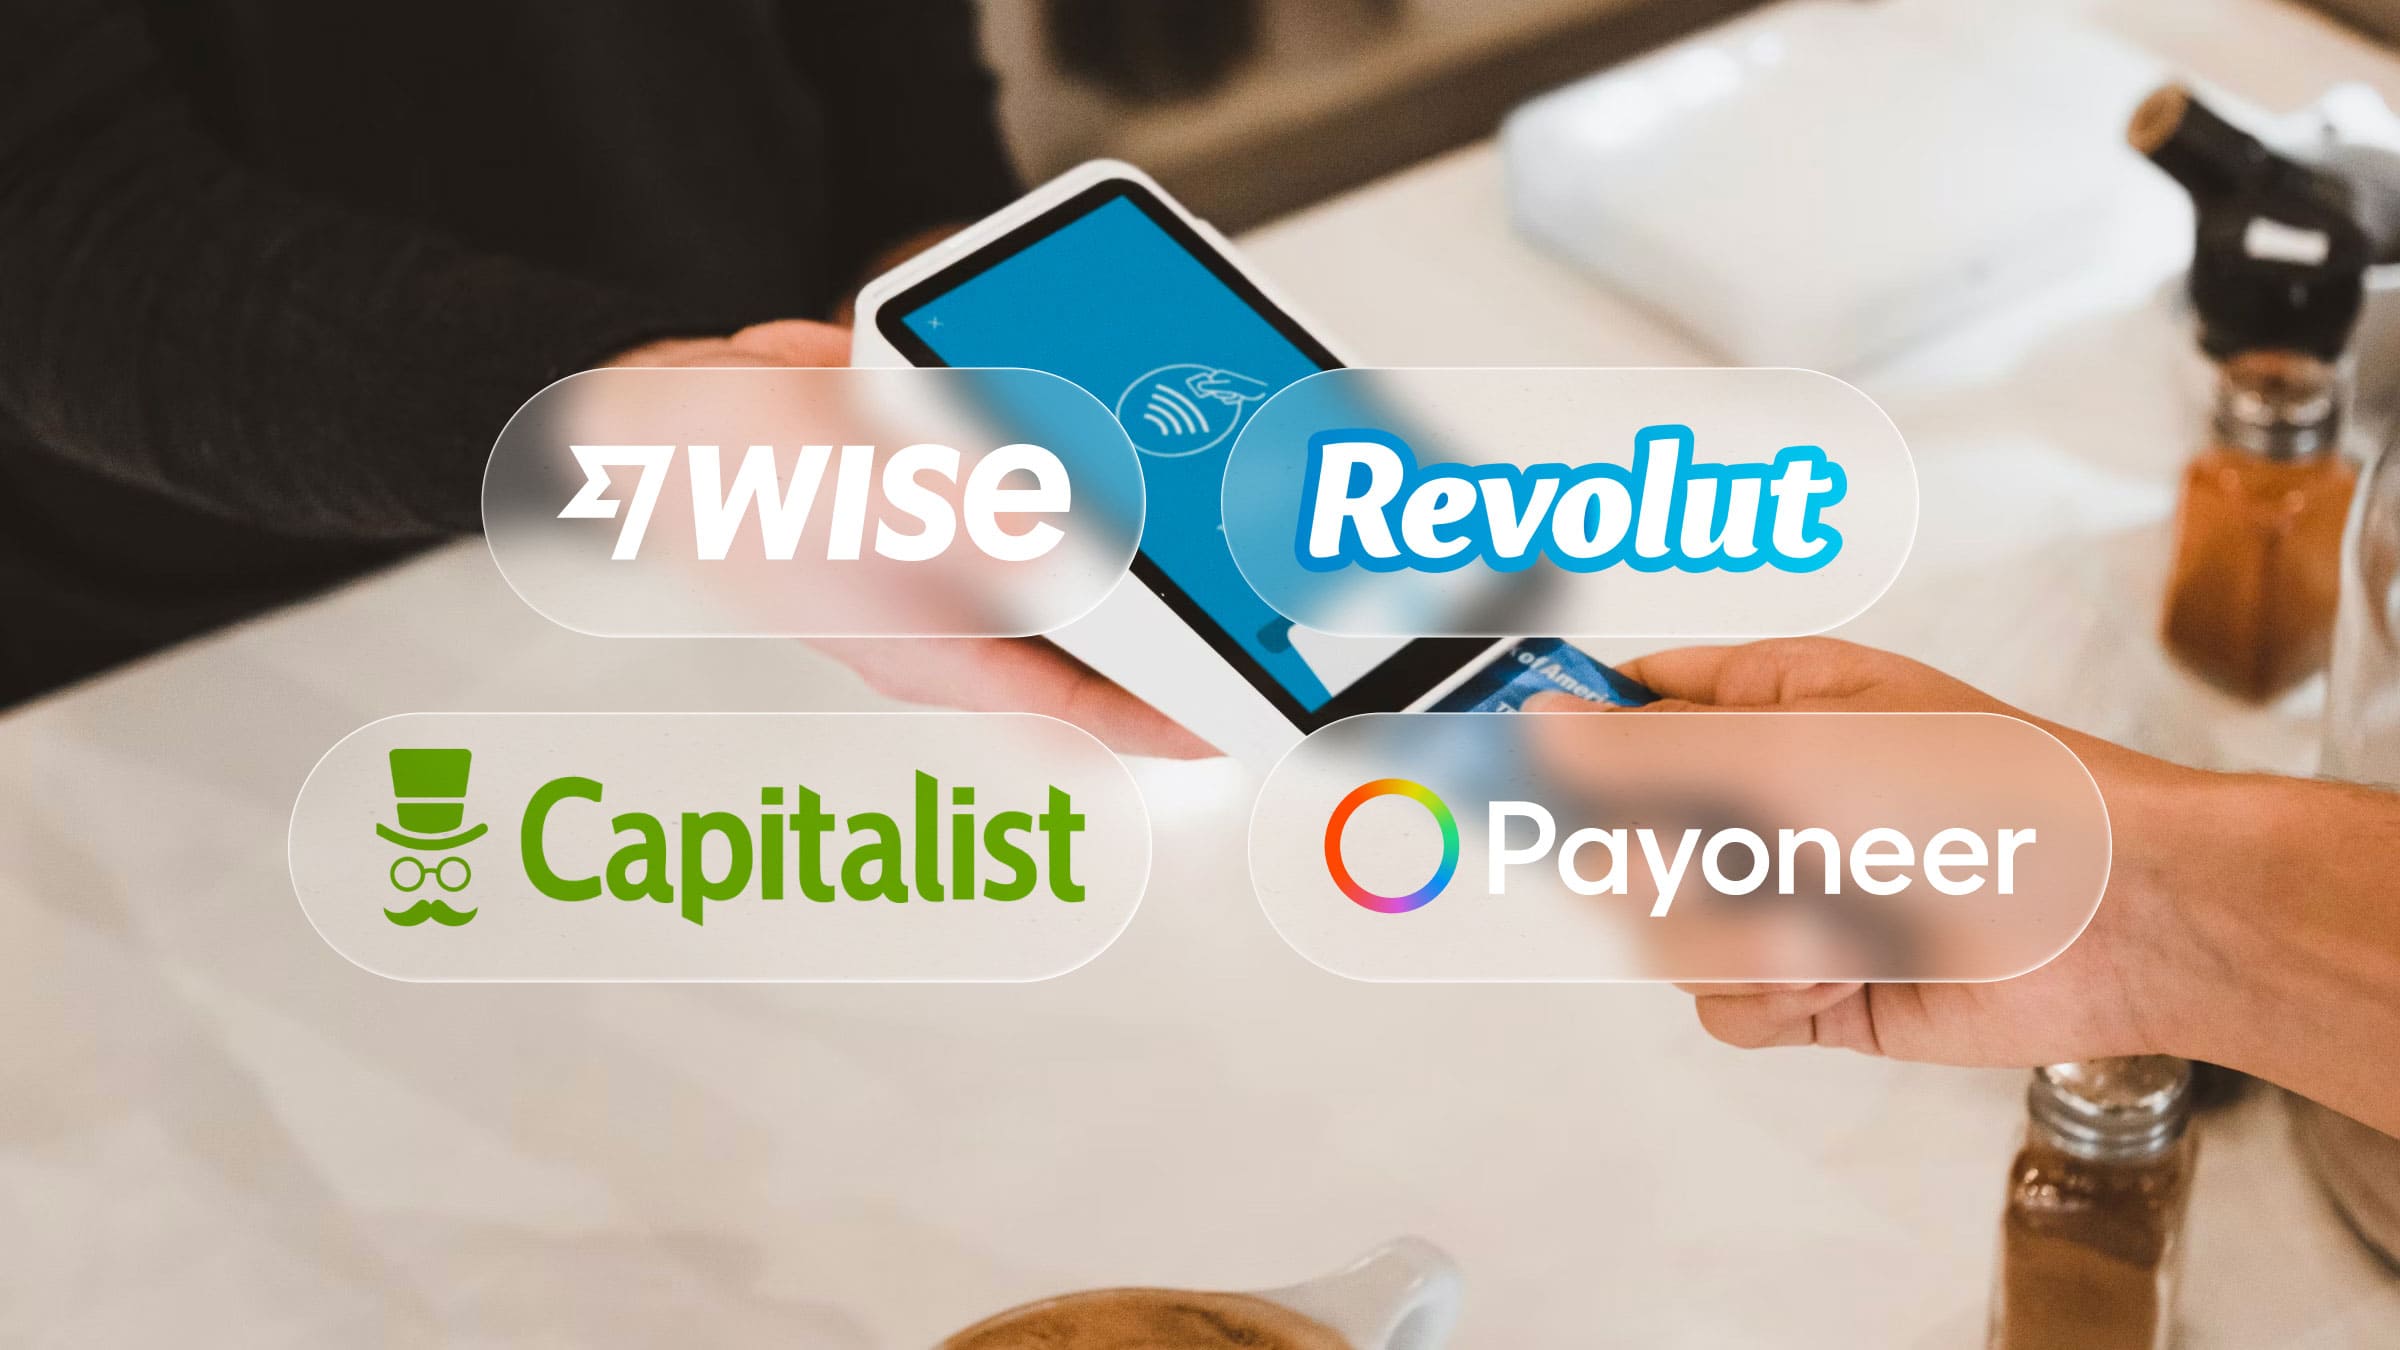 Популярные онлайн-банки для вывода денег с PayPal: Wise, Payoneer, Revolut, Capitalist